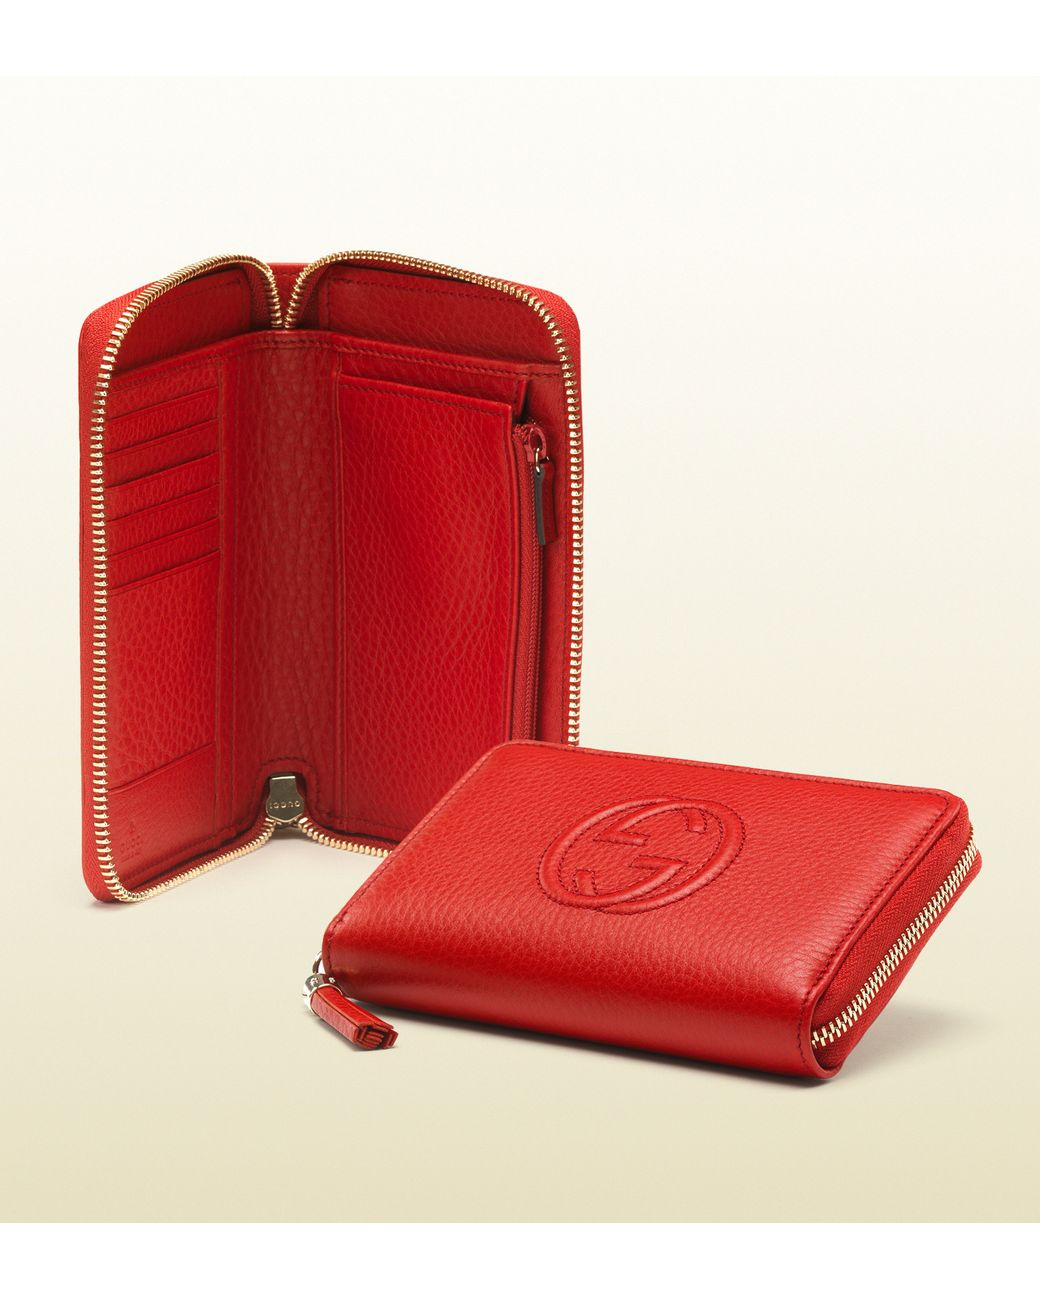 Gucci Soho Red Leather Medium Zip Around Wallet | Lyst